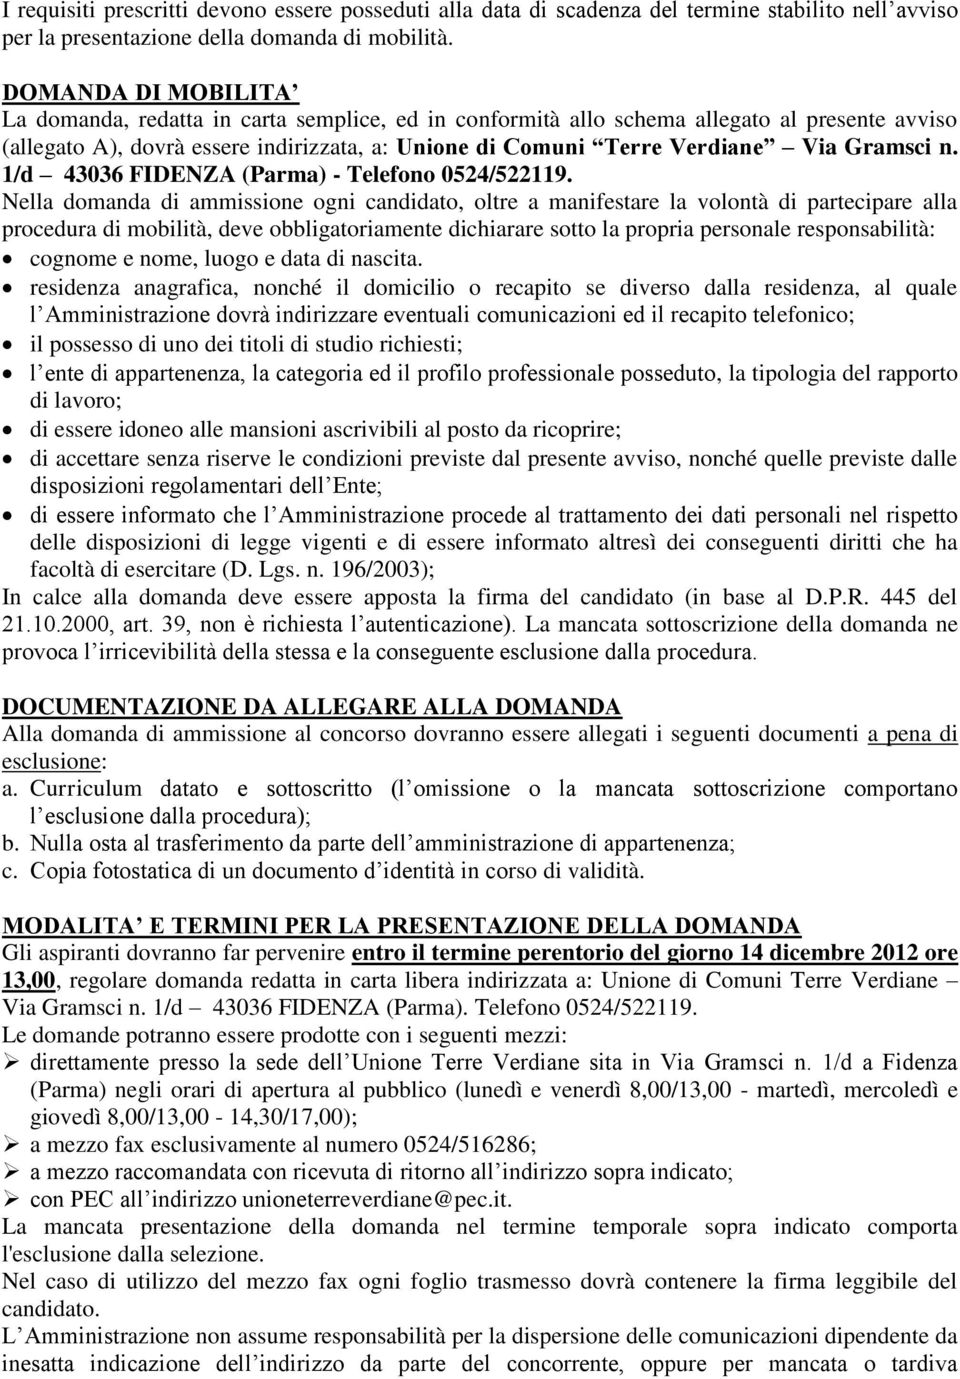 Gramsci n. 1/d 43036 FIDENZA (Parma) - Telefono 0524/522119.